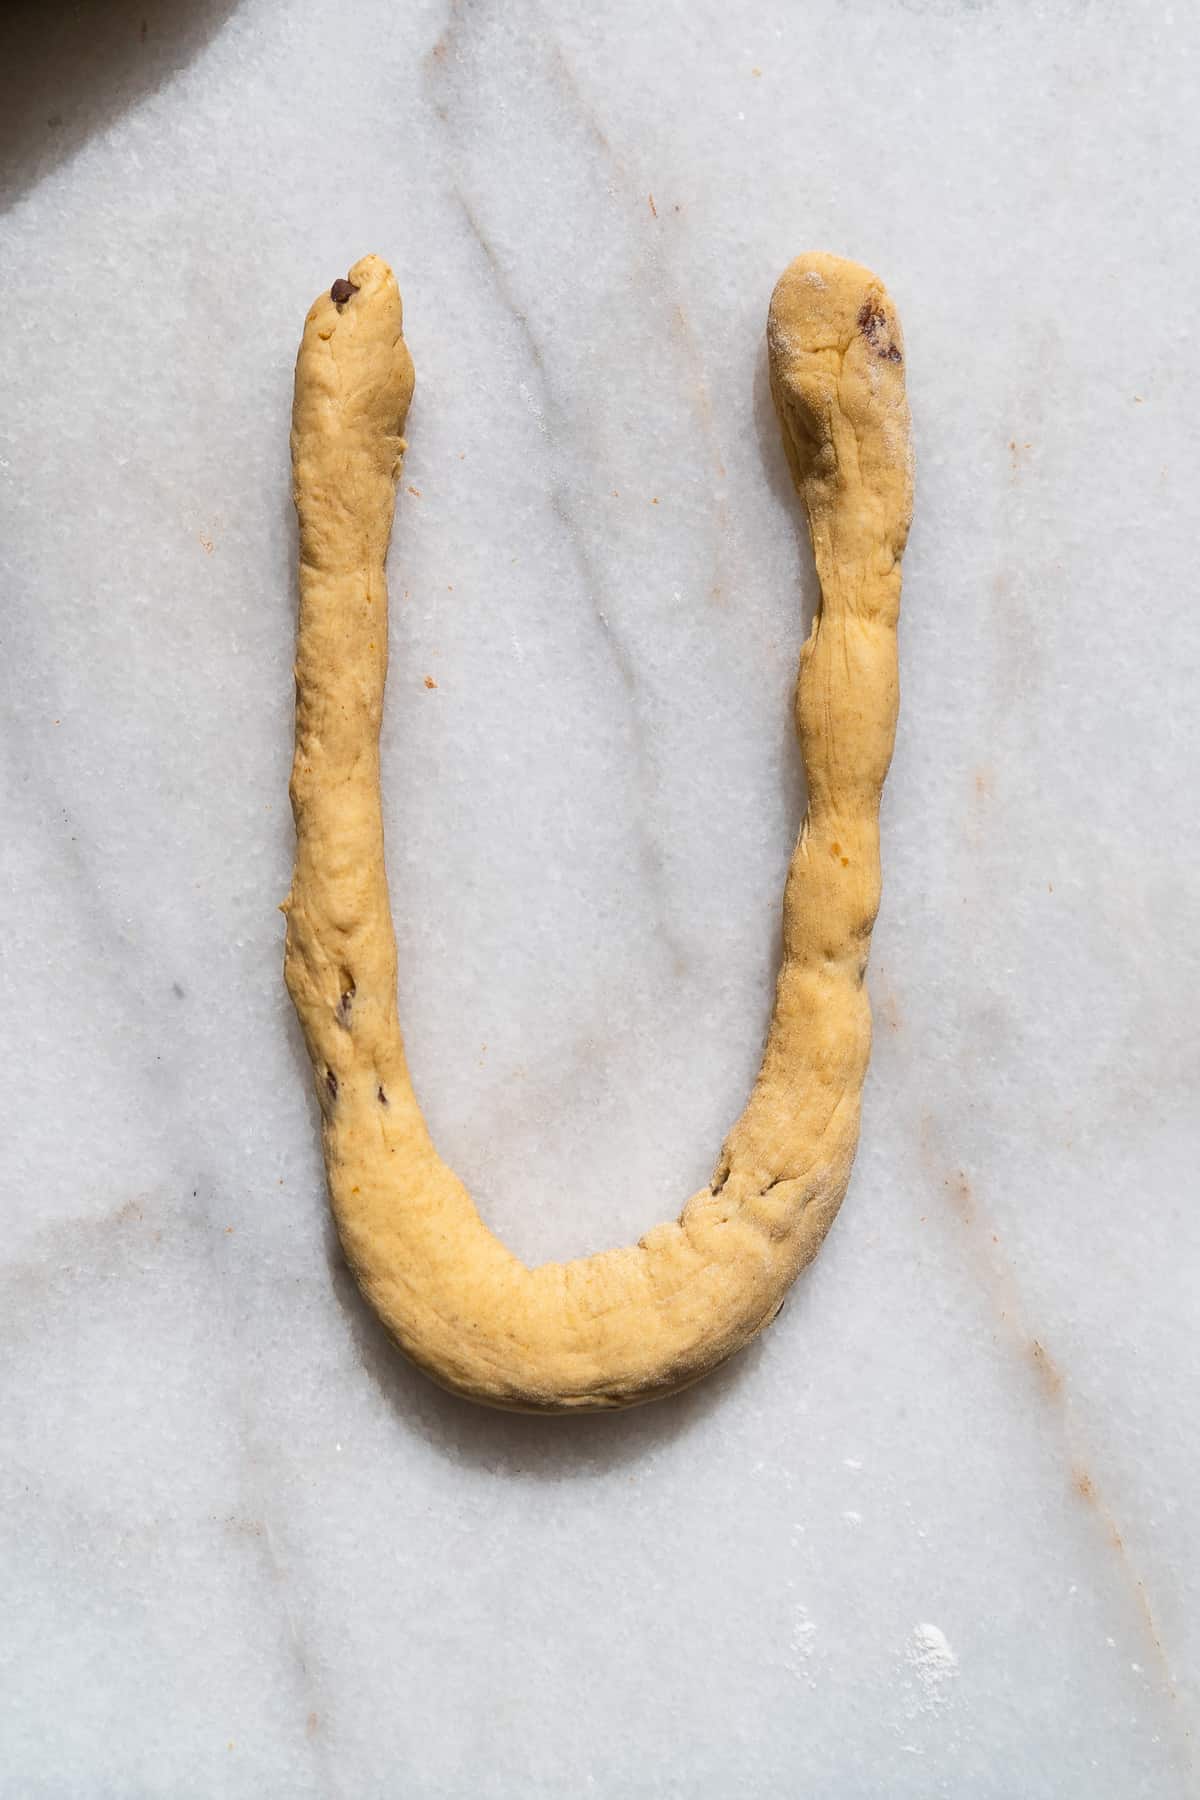 Pumpkin soft pretzel dough in a U shape.